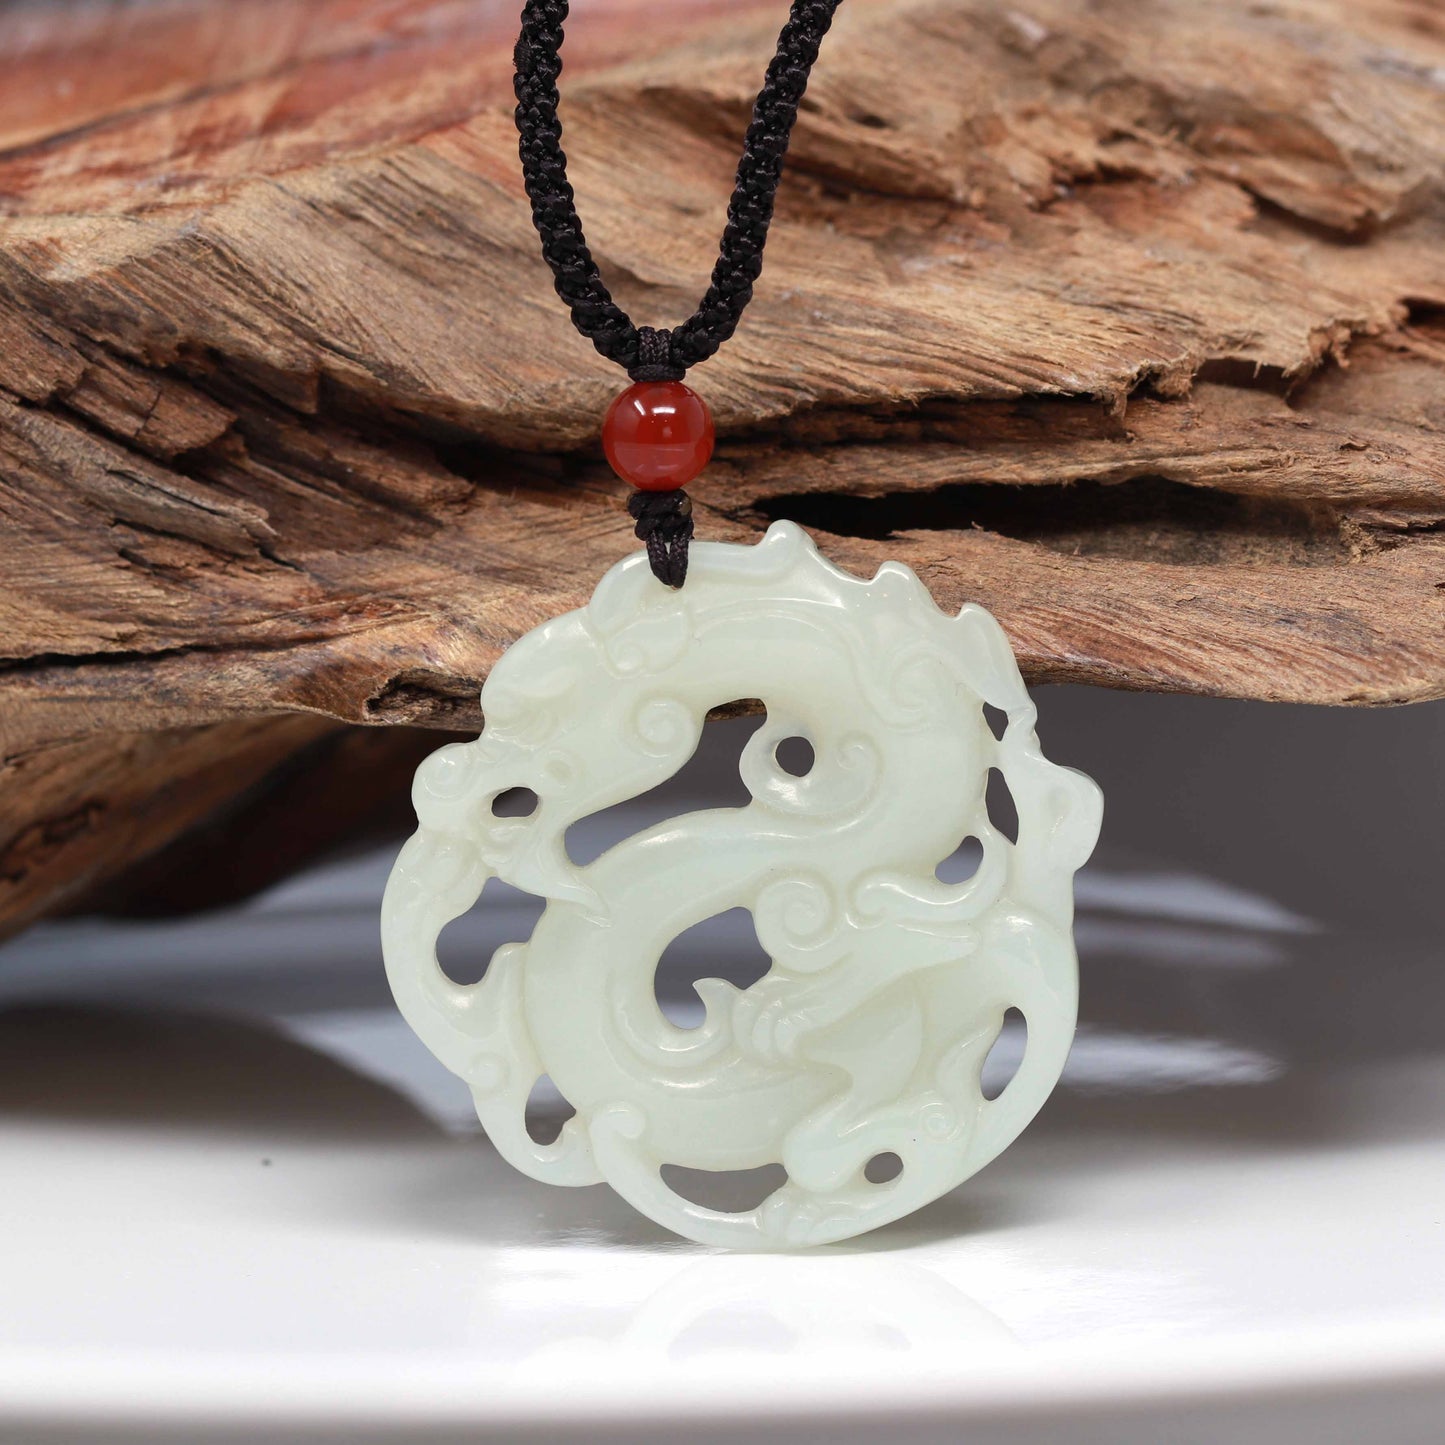 RealJade "Jade Dragon In Cloud" Genuine White Nephrite Jade Dragon Pendant Necklace